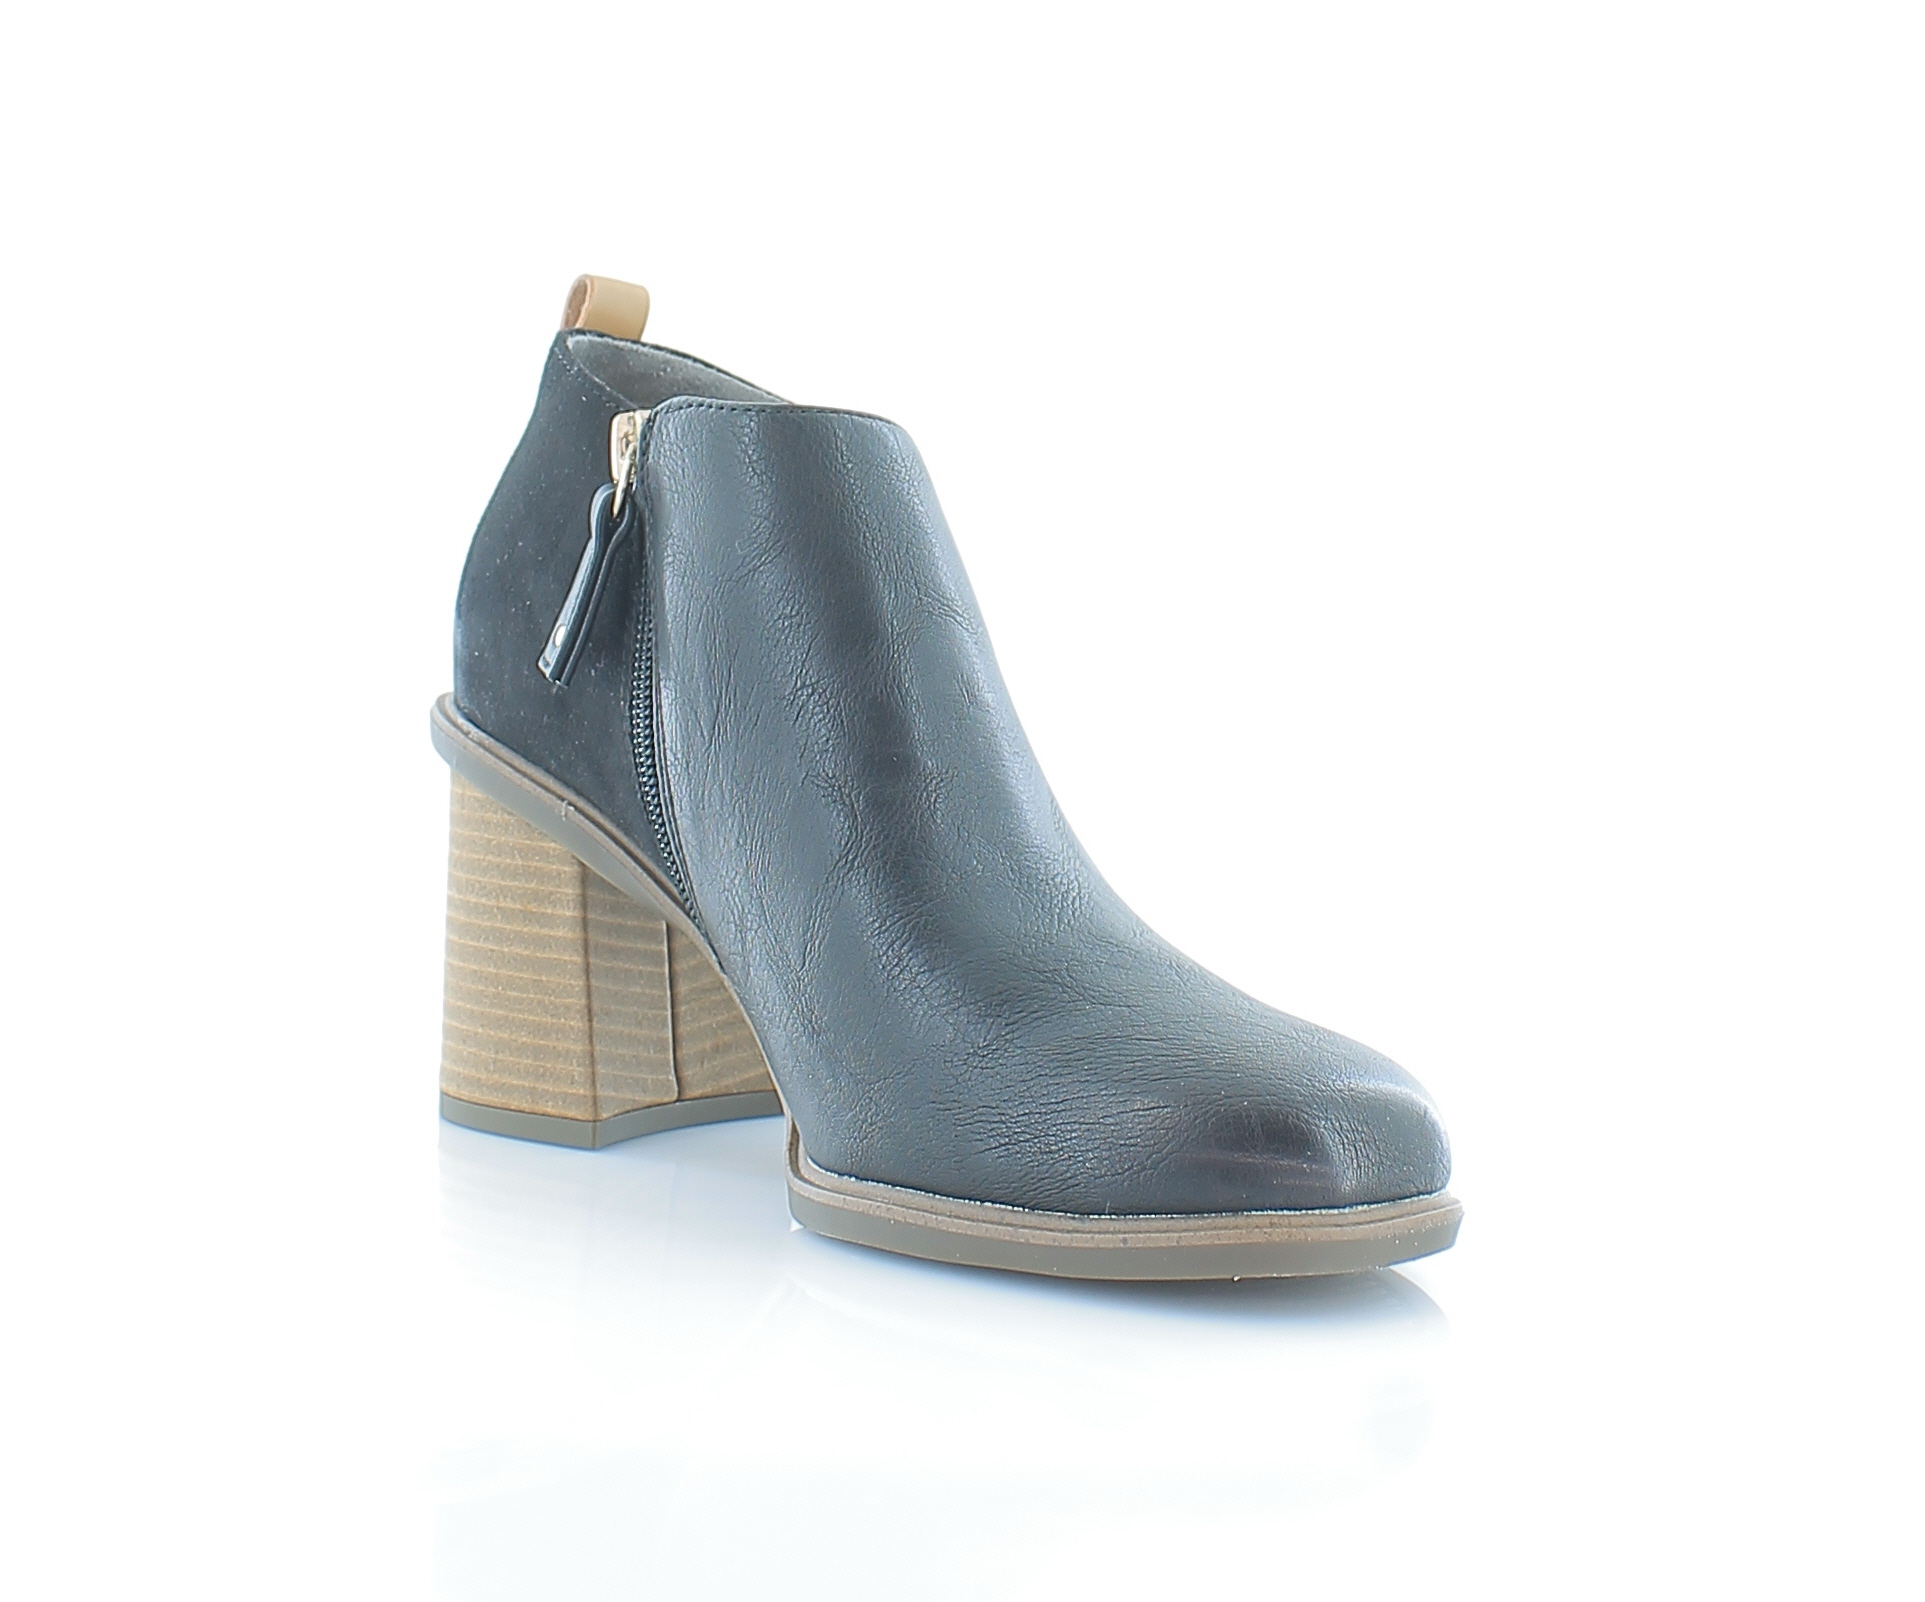 Dr. Scholl's Roxanne Women's Boots Black Synthetic | eBay